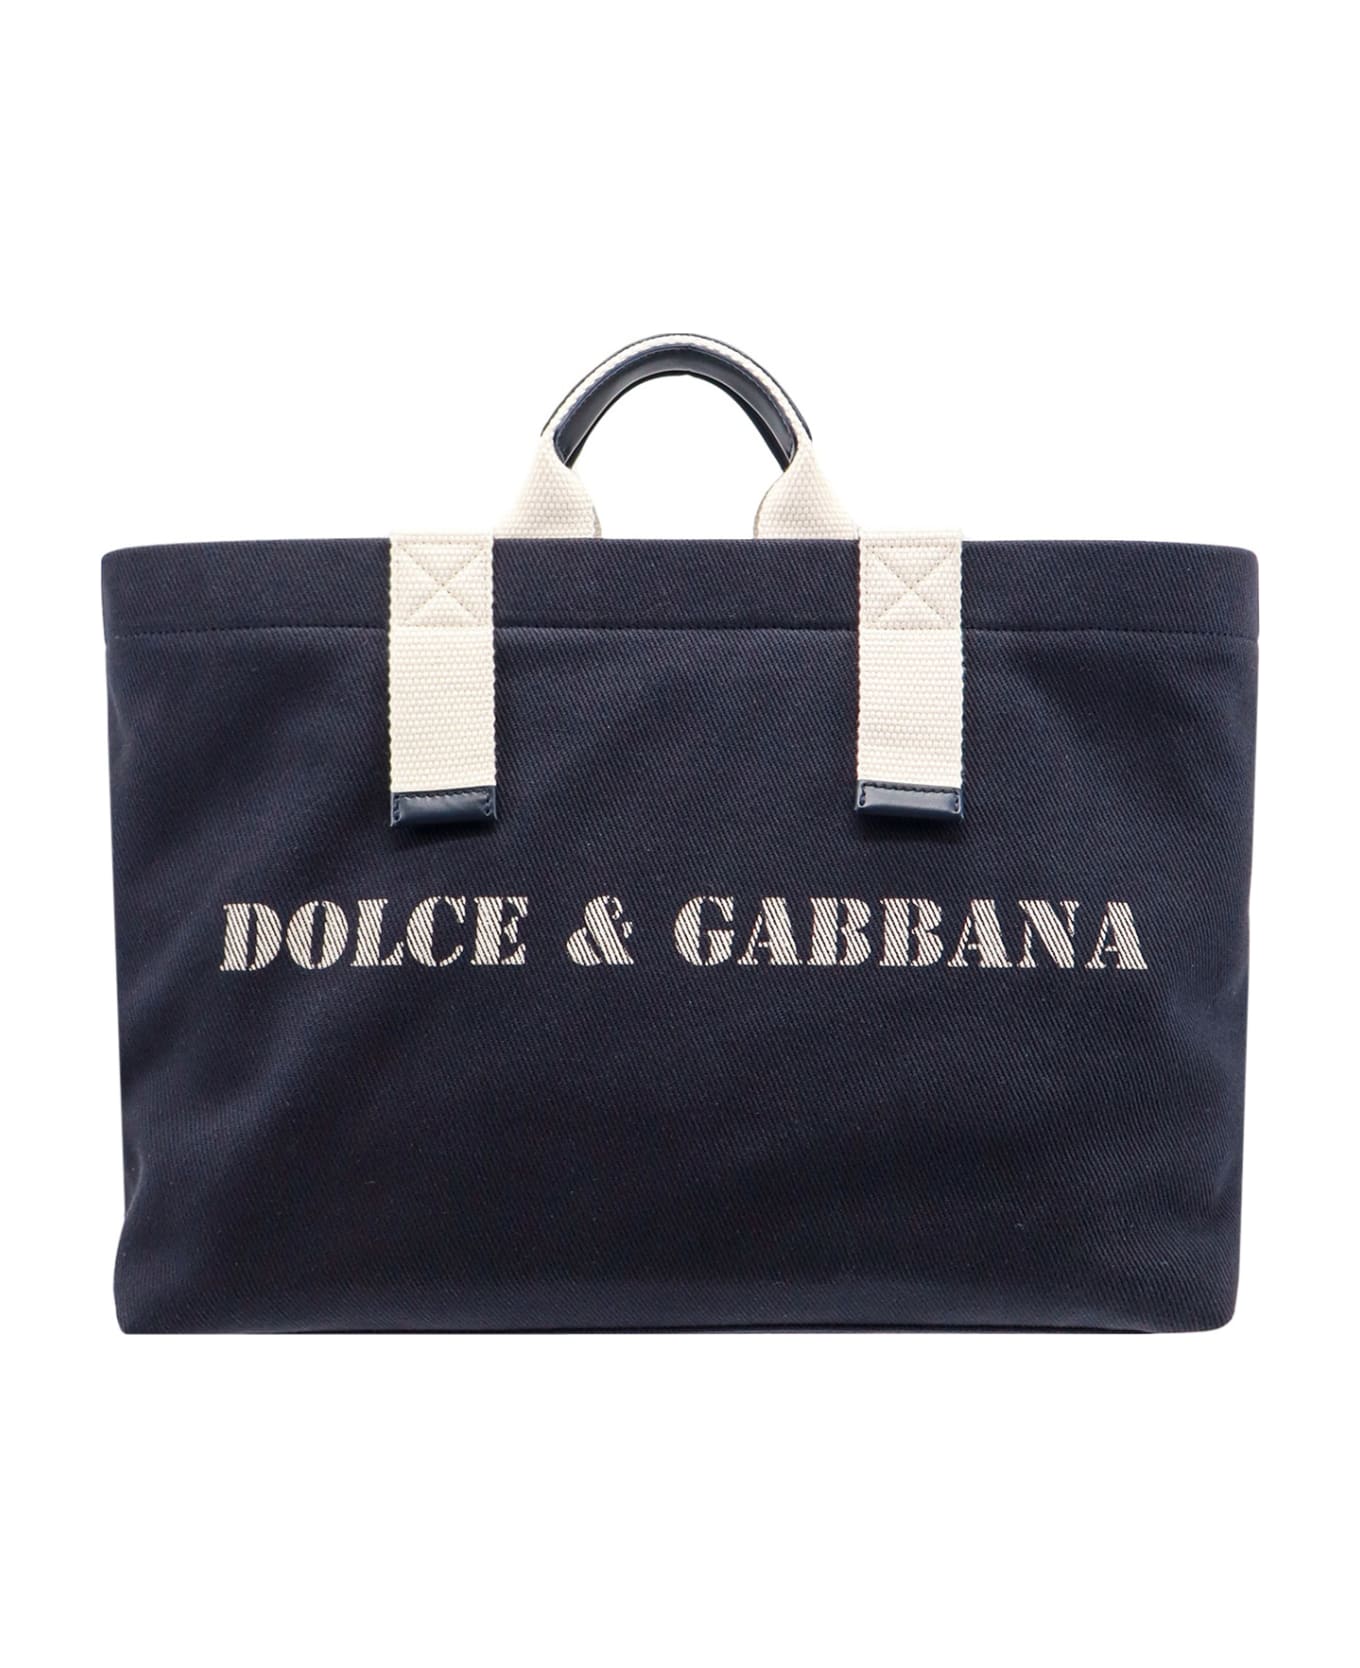 Dolce & Gabbana Shopping Bag With Logo - Blue トートバッグ